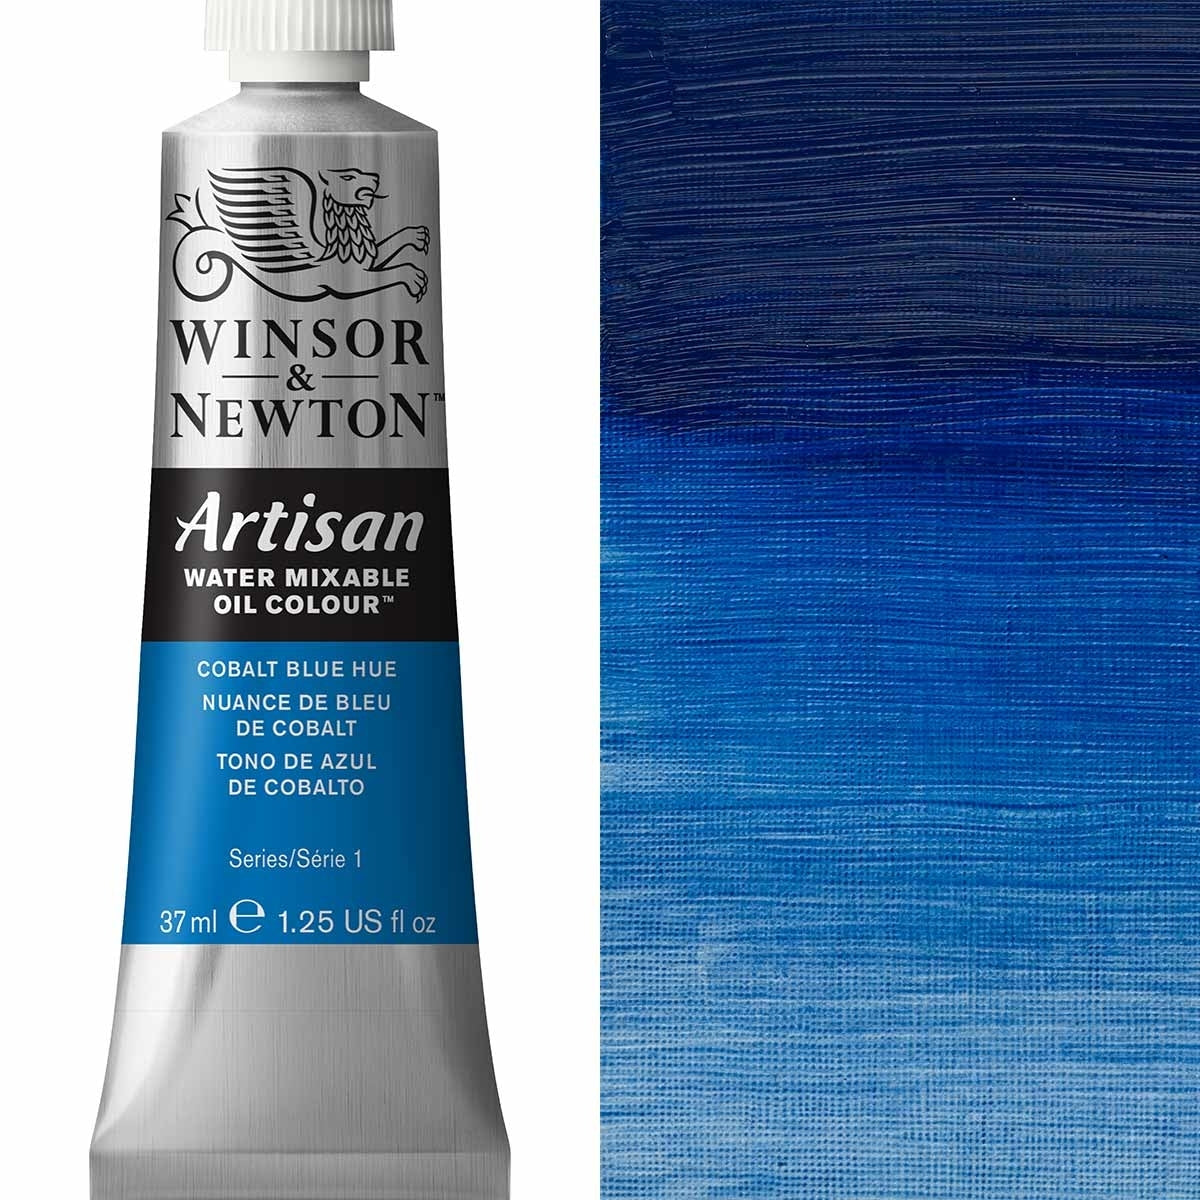 Winsor and Newton - Artisan Oil Colour Watermixable - 37ml - Cobalt Blue Hue